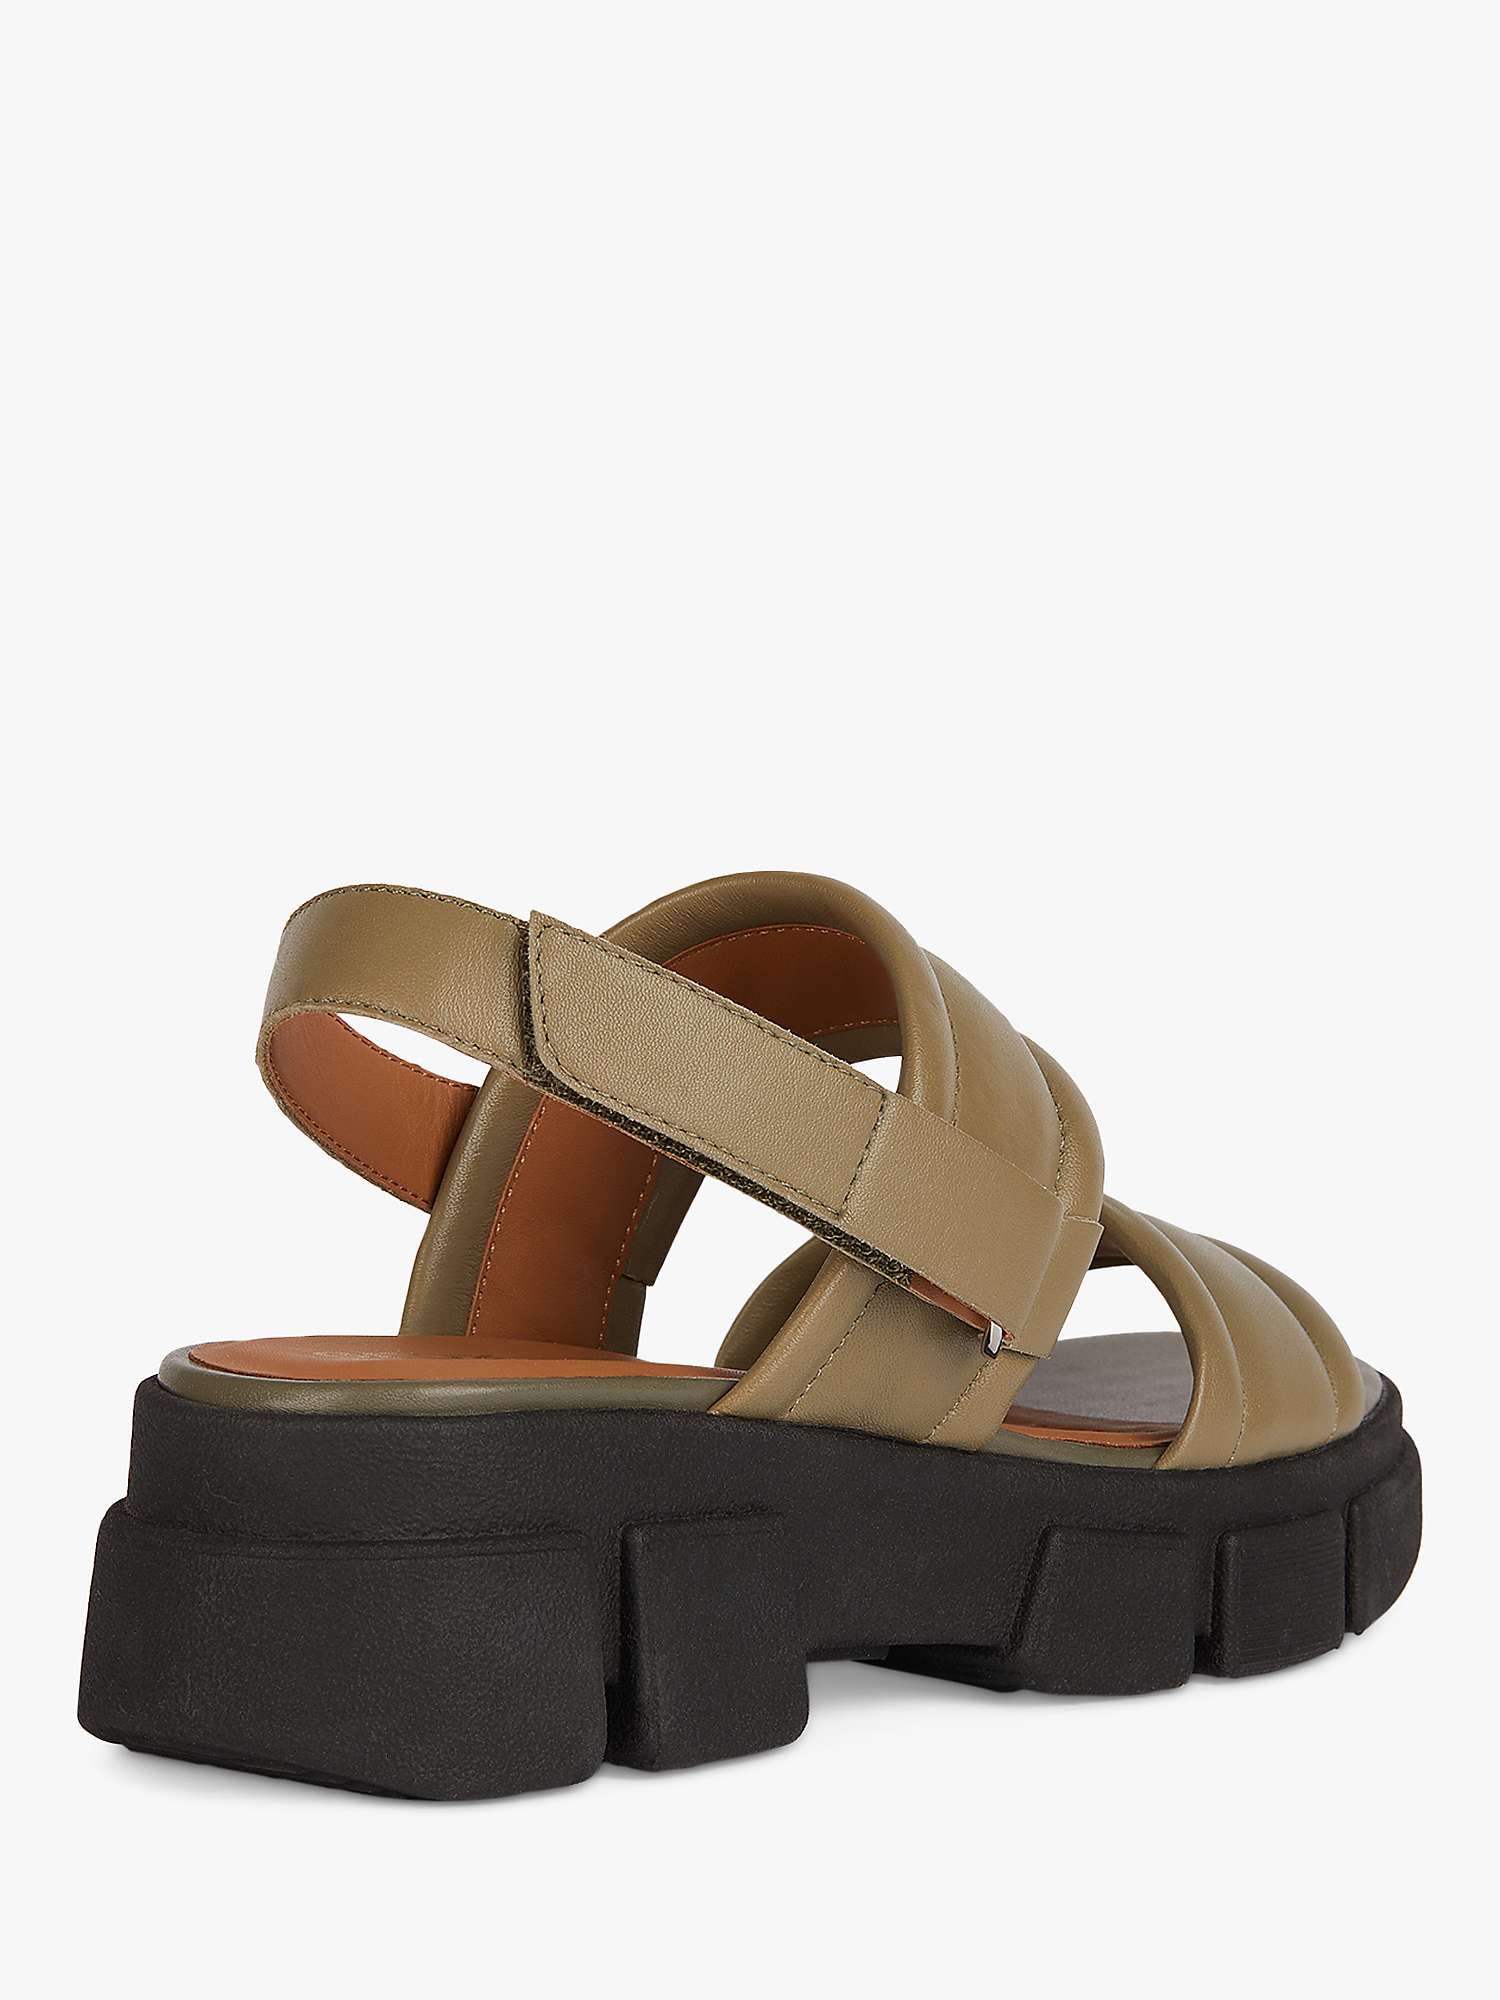 Buy Geox Lisbona Leather Sandals Online at johnlewis.com